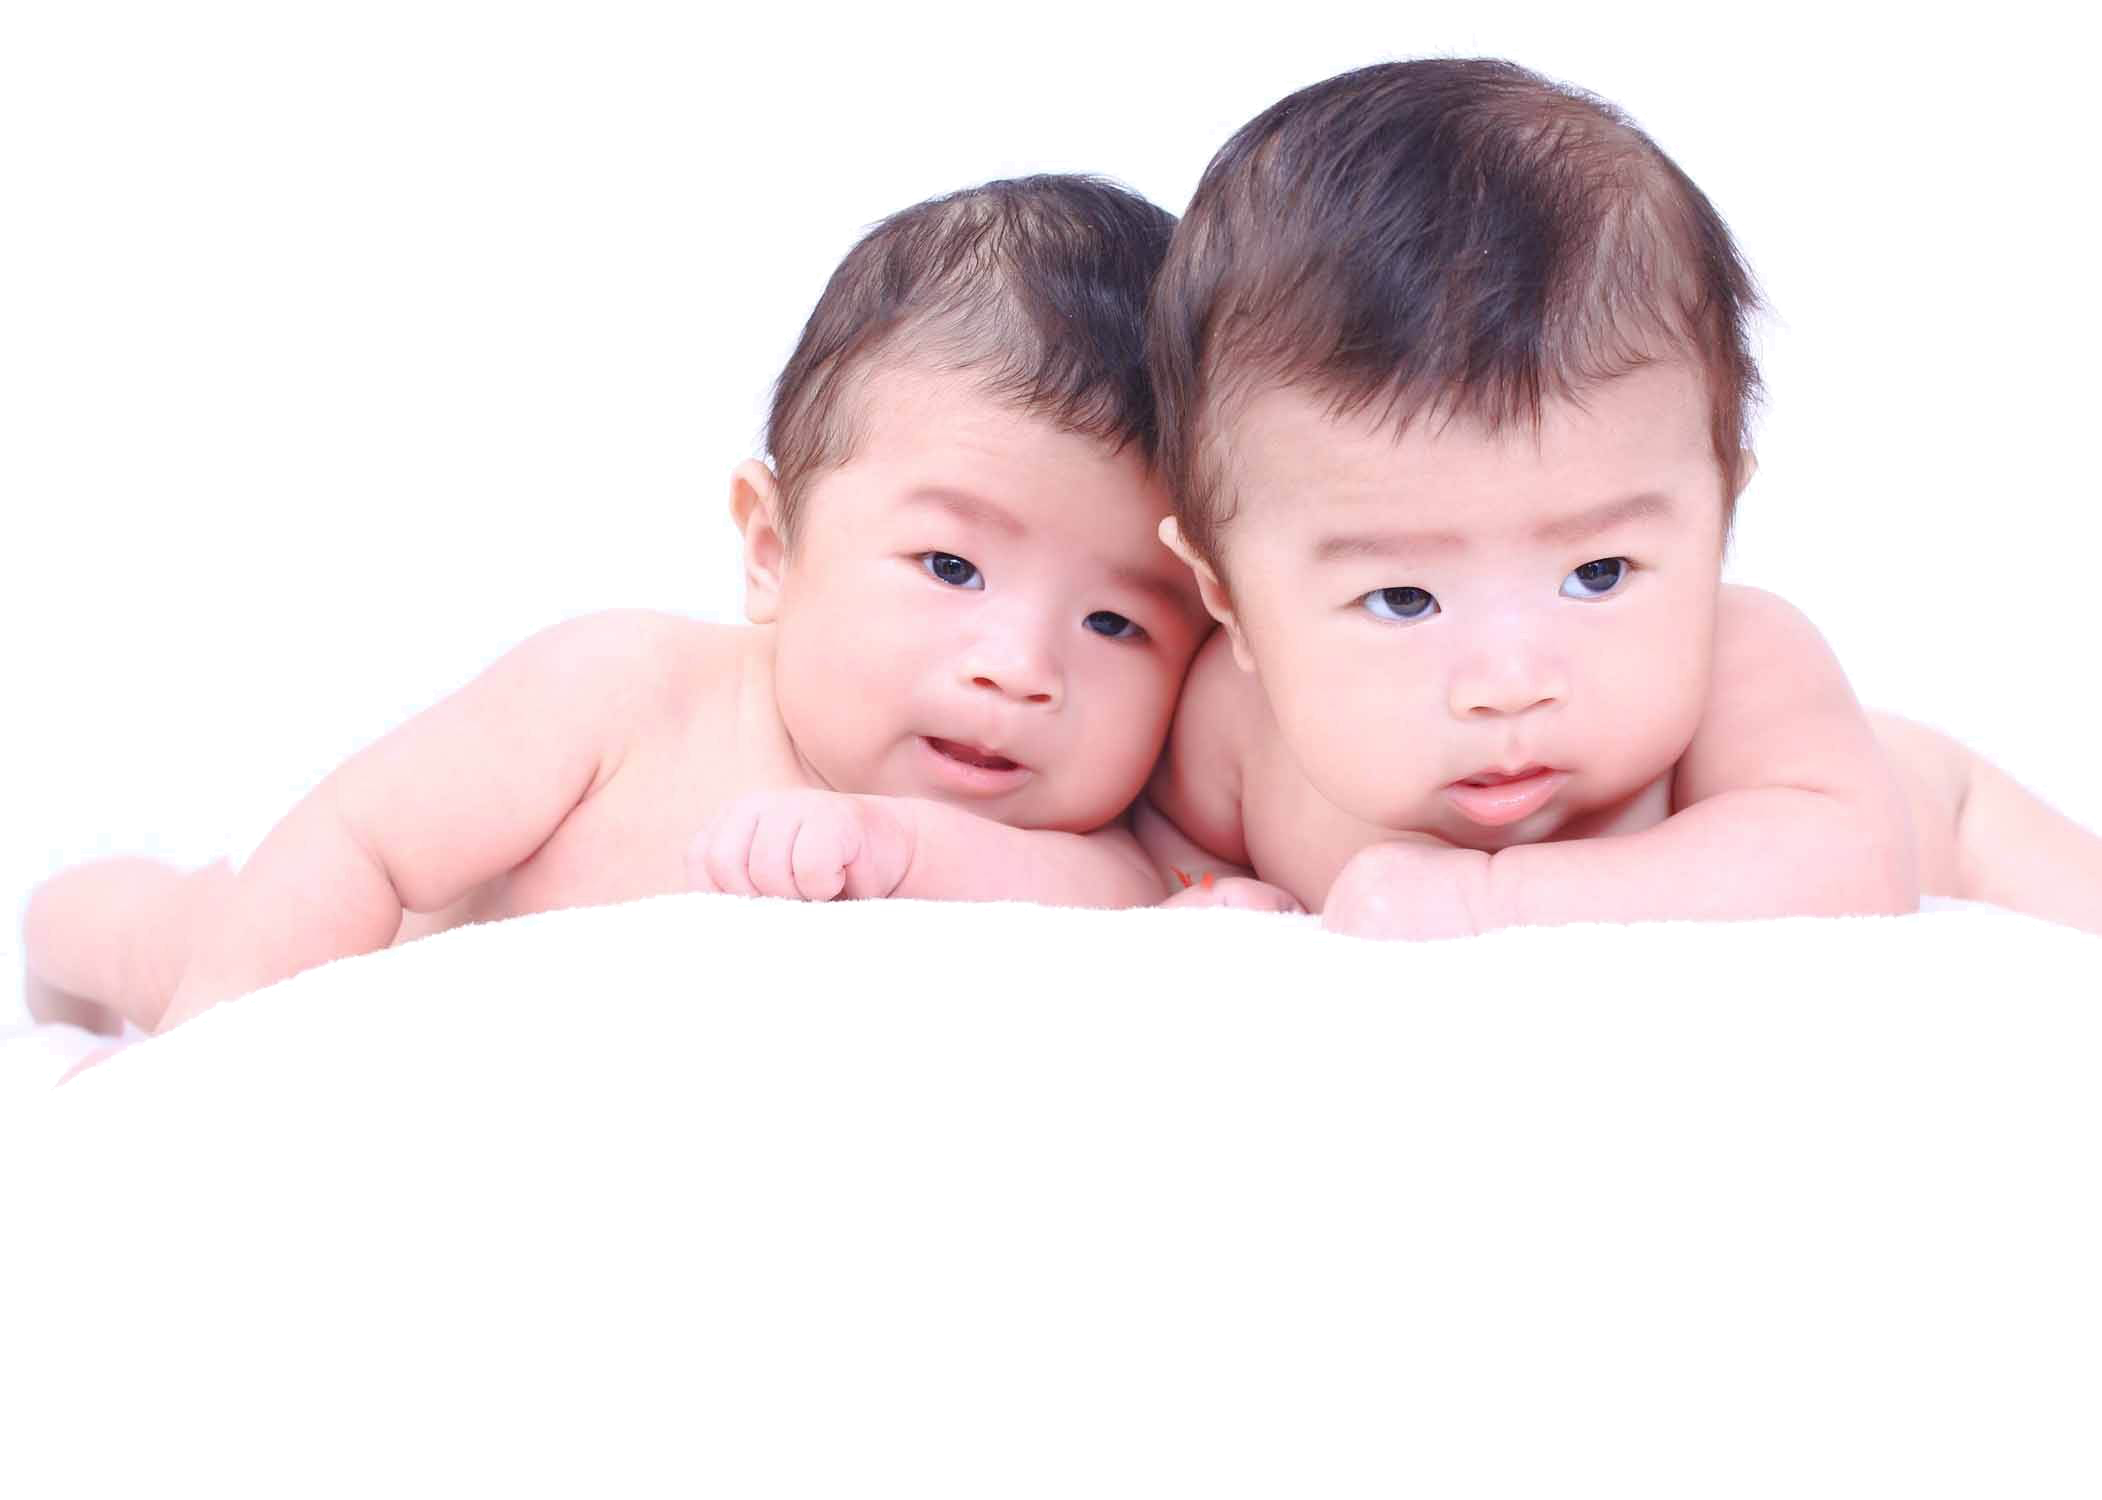 Very cute twin baby girls smi